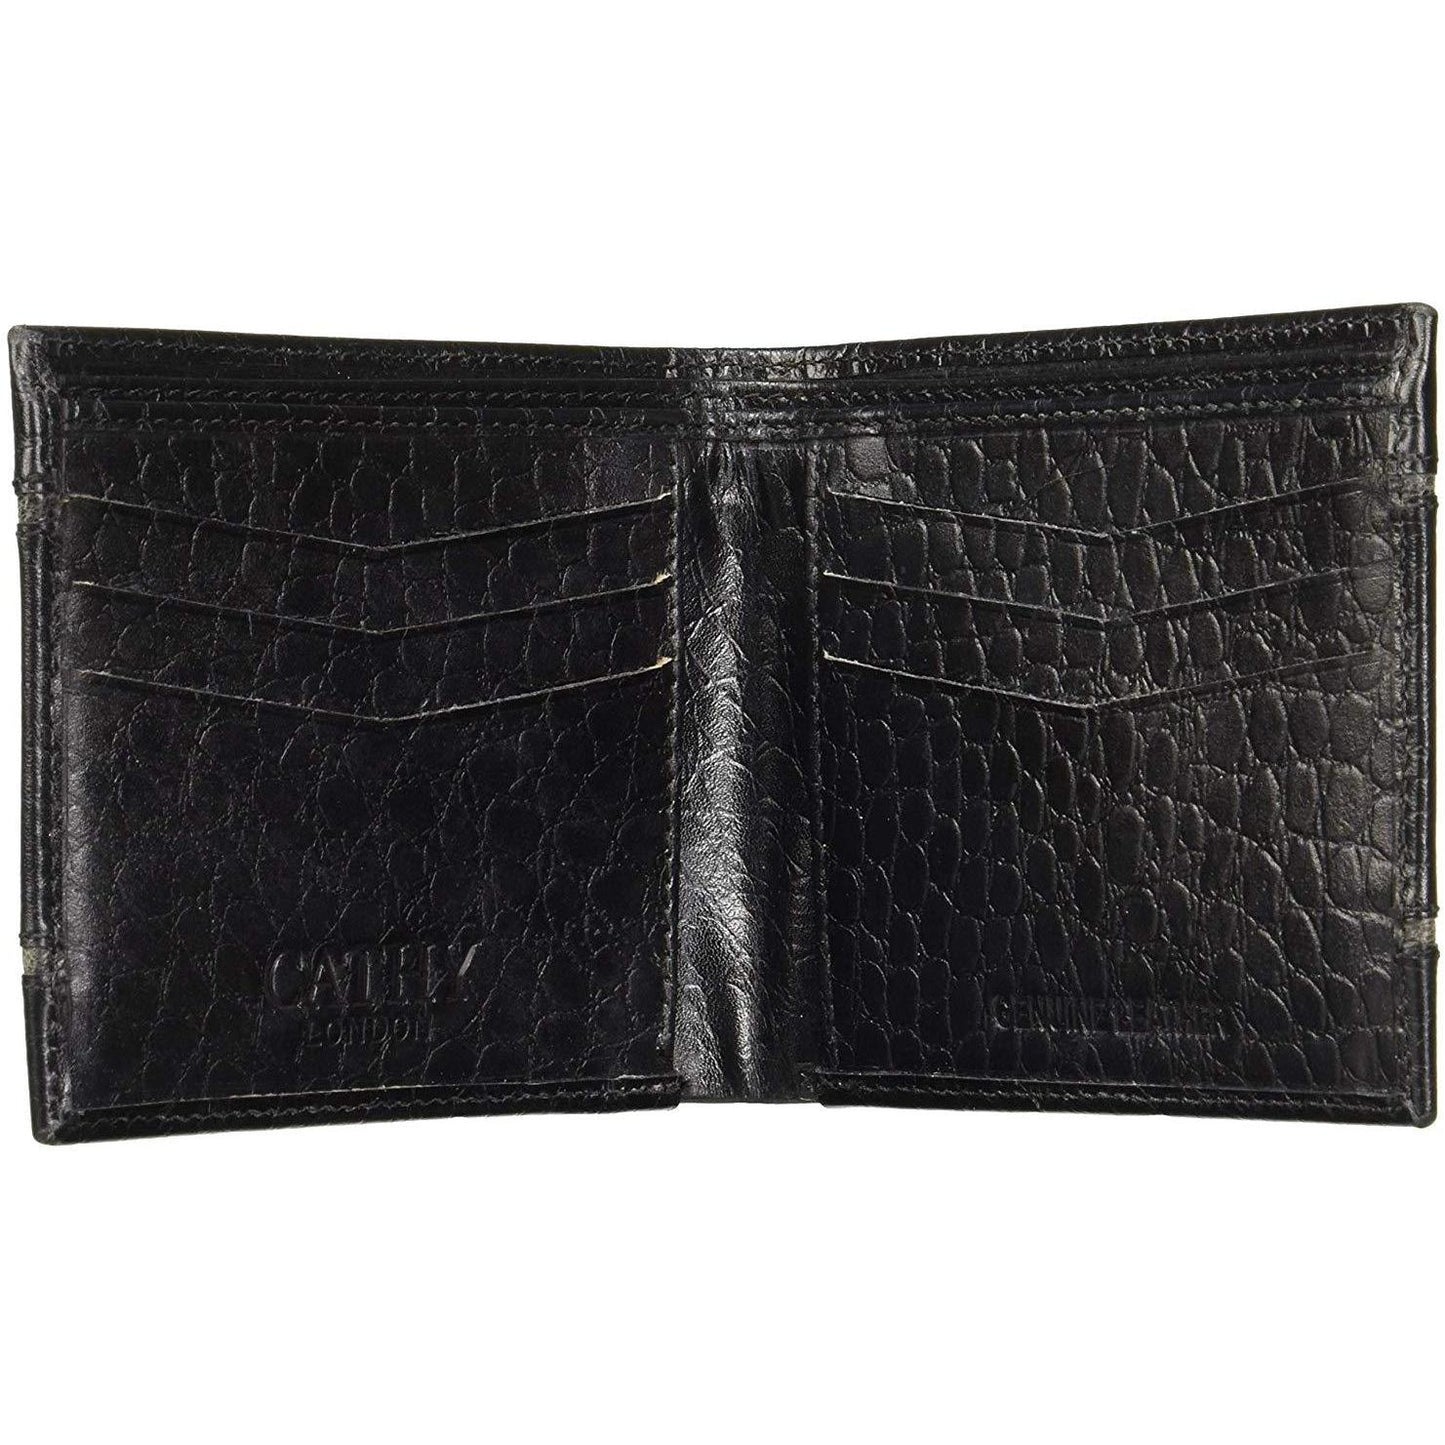 Black Colour Bi-Fold Italian Leather Slim Wallet ( 6 Card Slot + 2 Hidden Compartment + Cash Compartment)